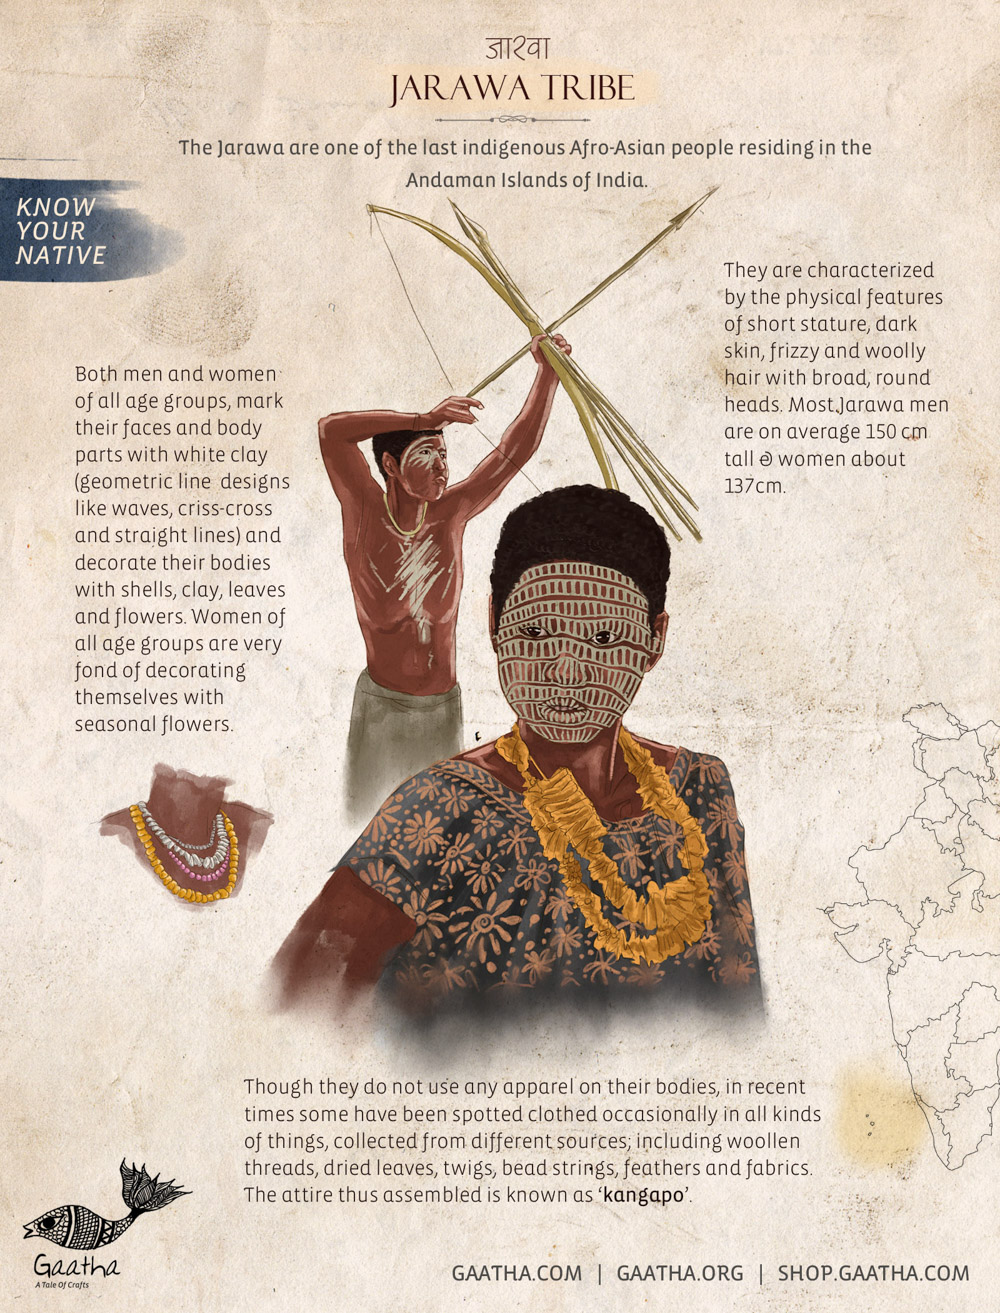 The Jawara | Tribal community India.